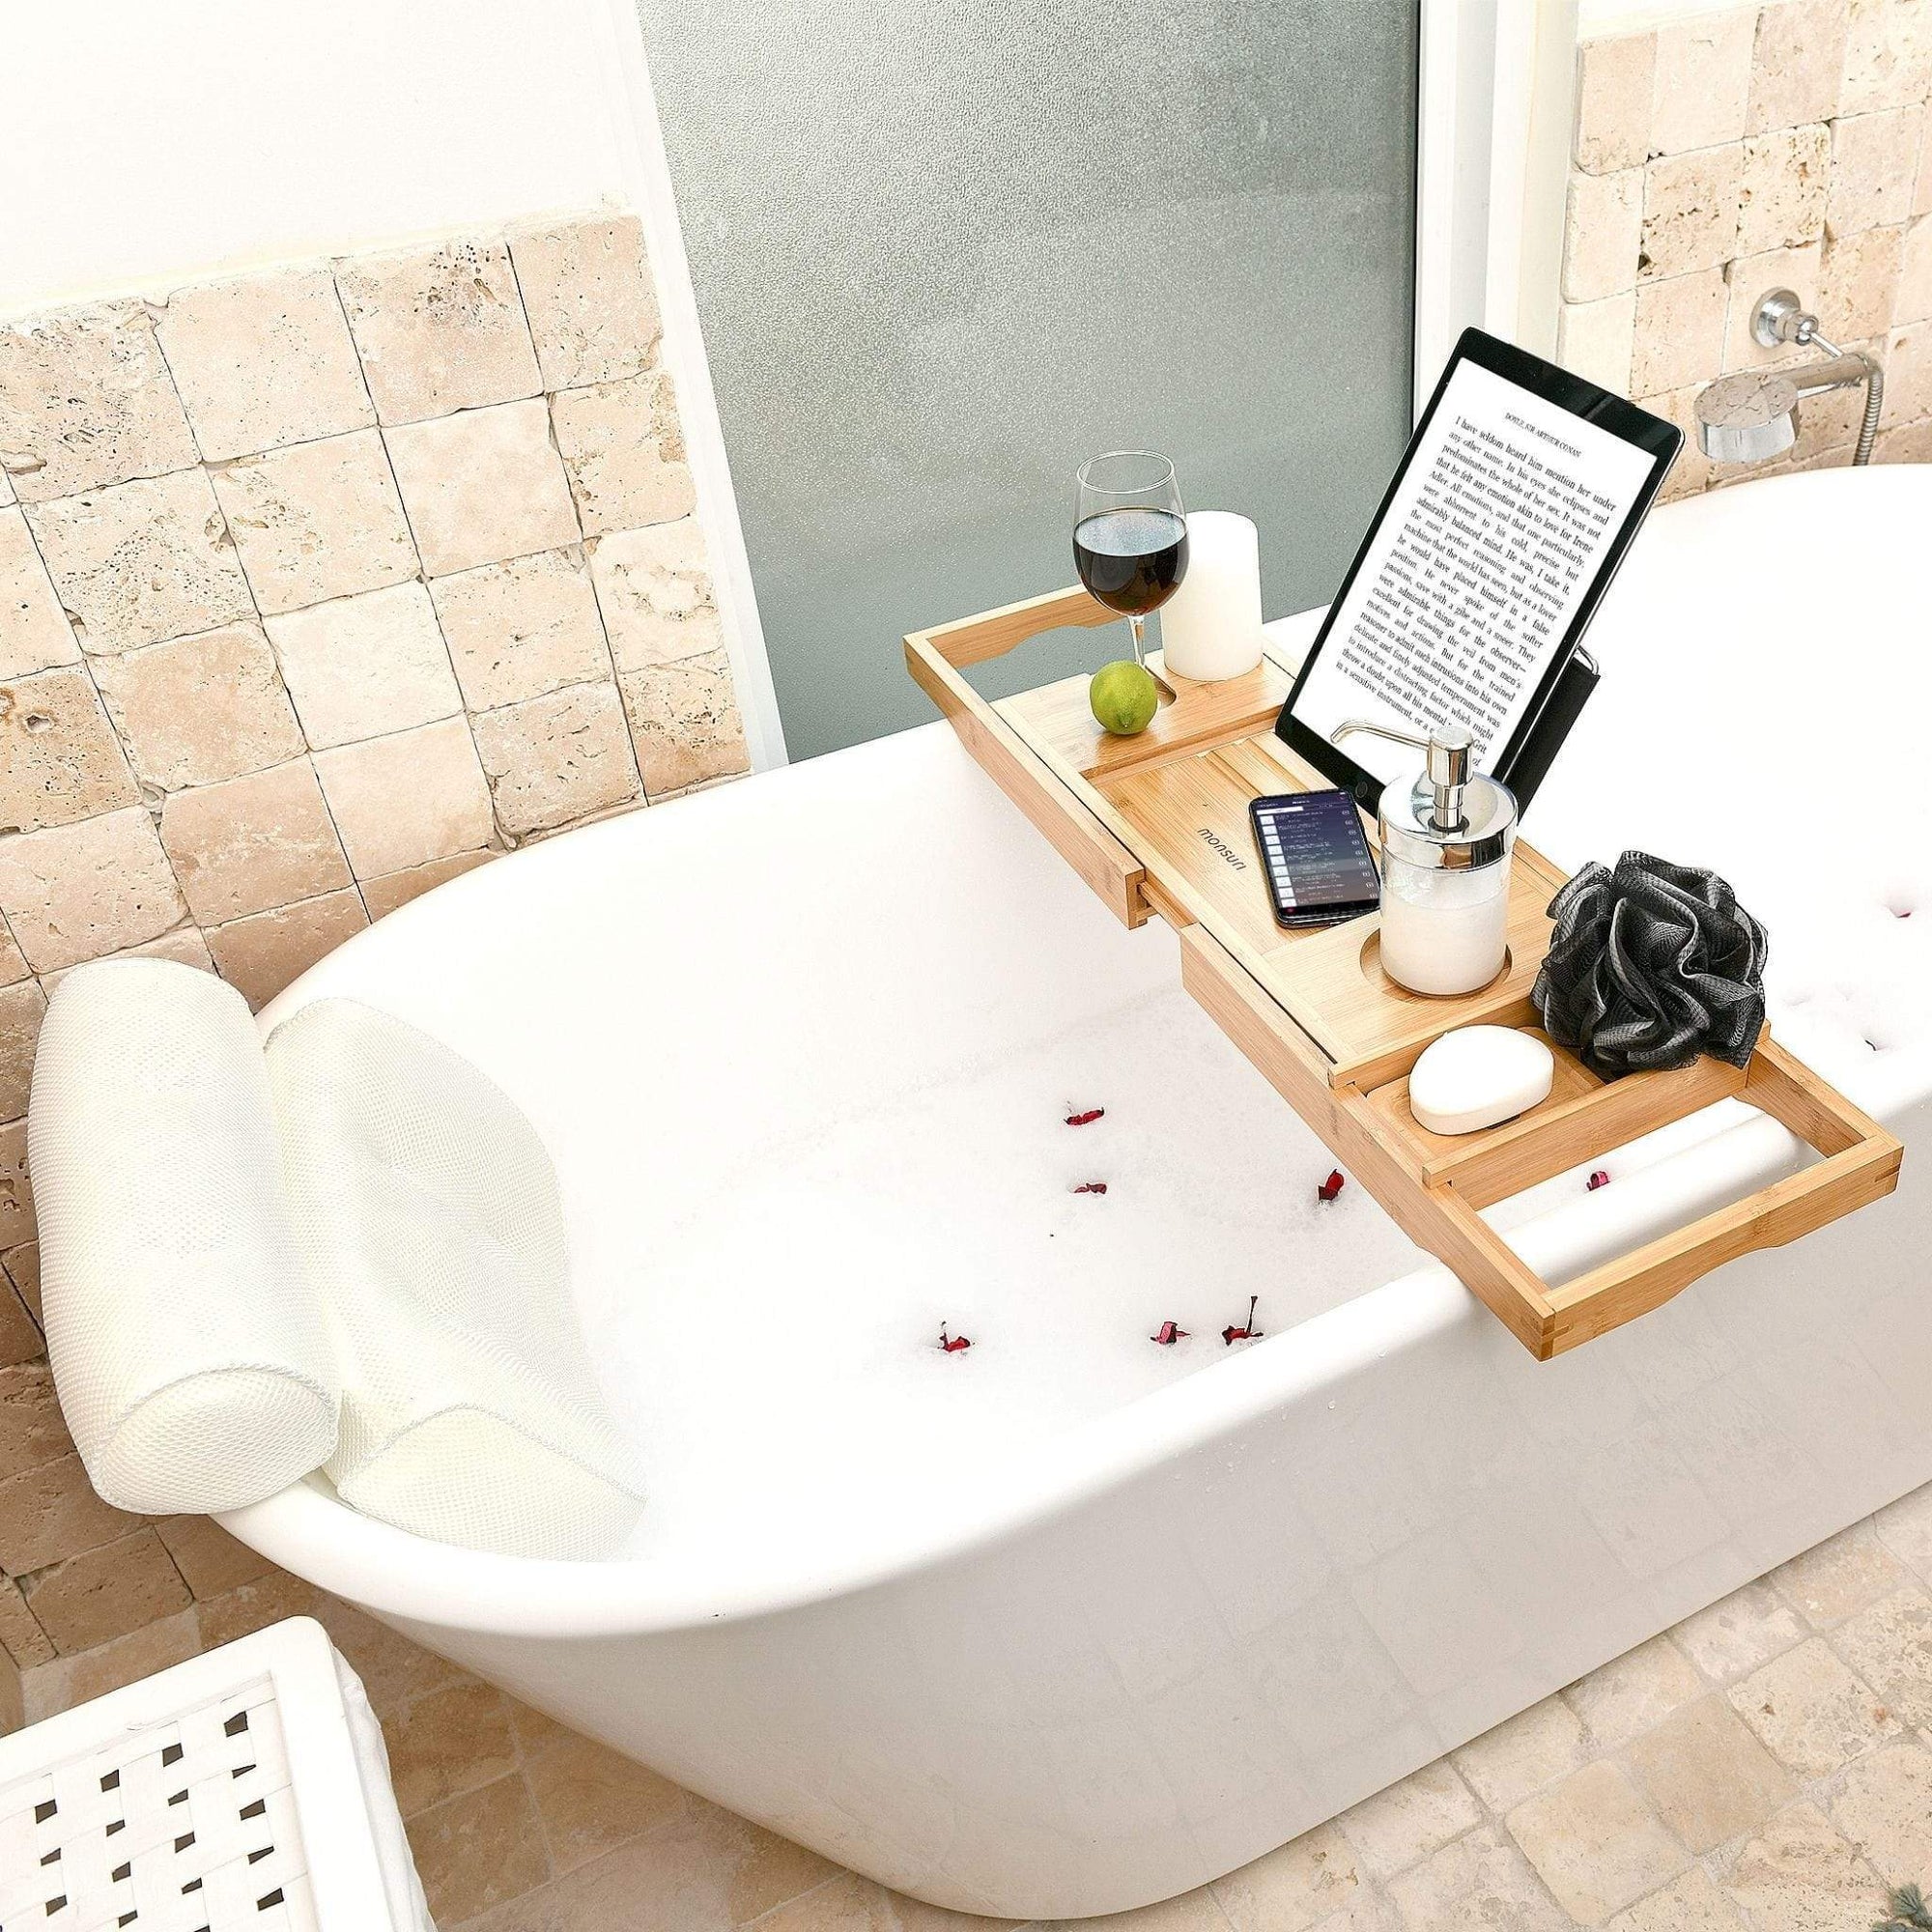 Bath Pillow By LuxeBath™ - Gift For Wife – LuxeBath.co